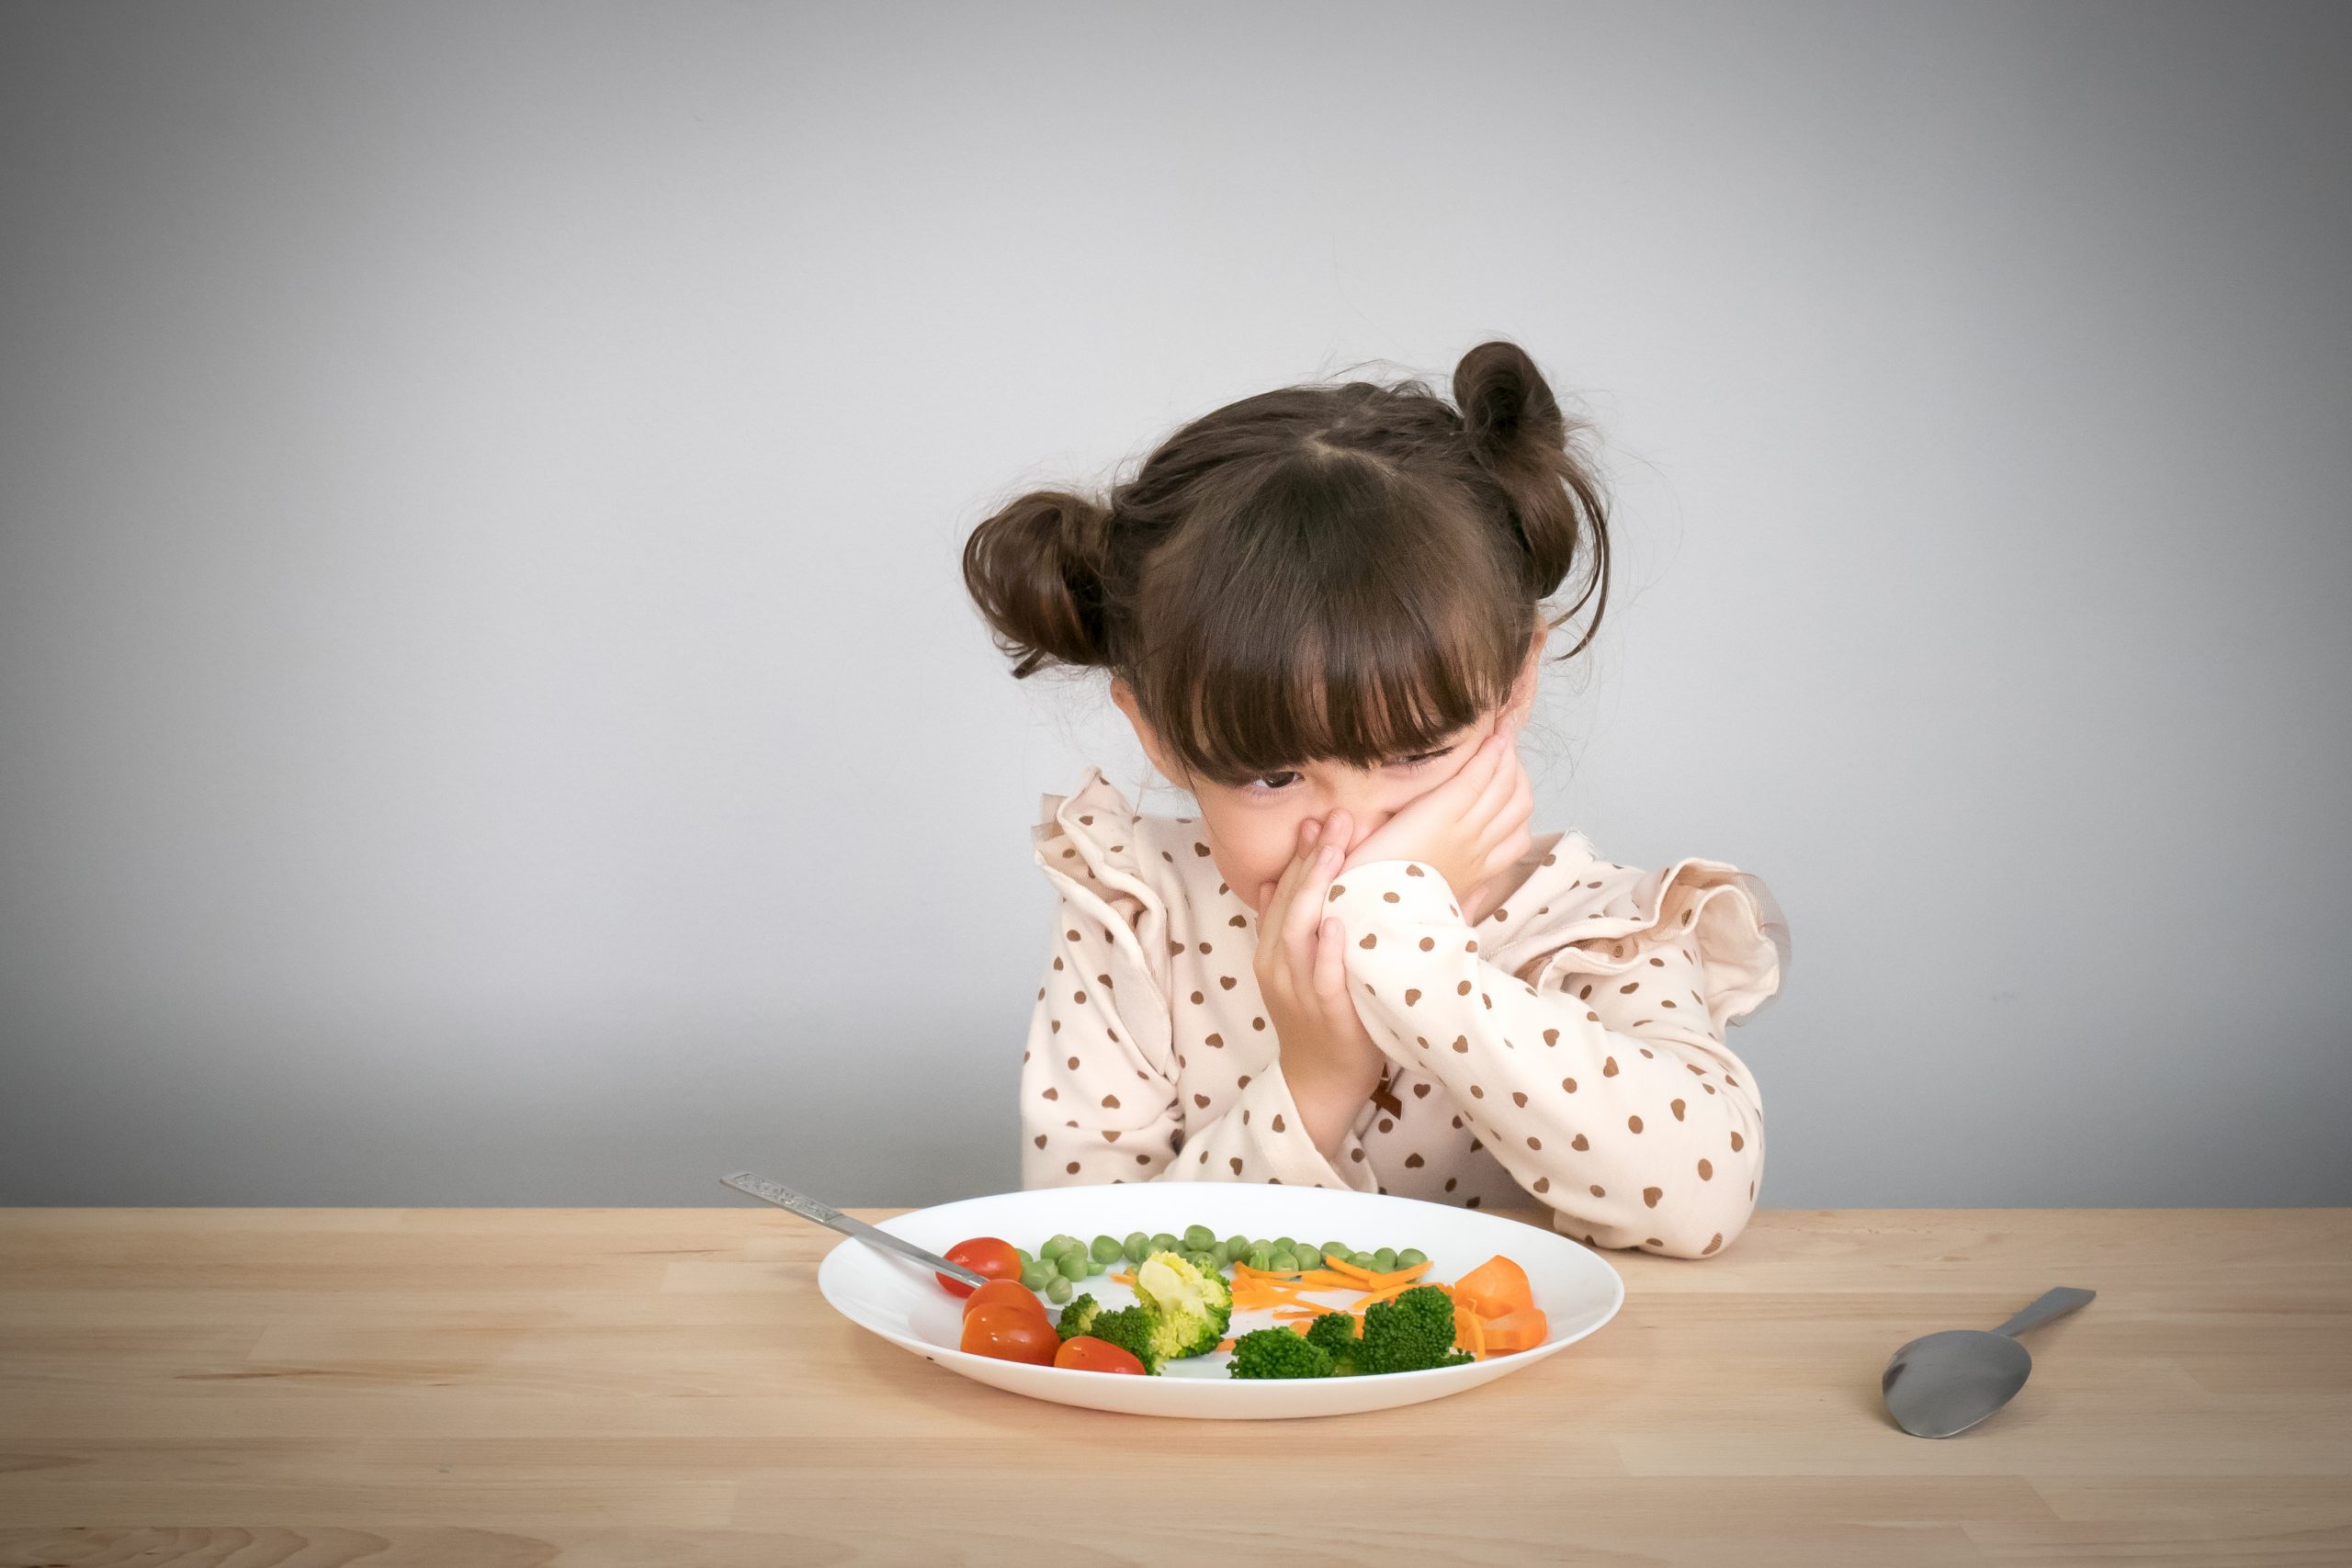 children need to eat more veg